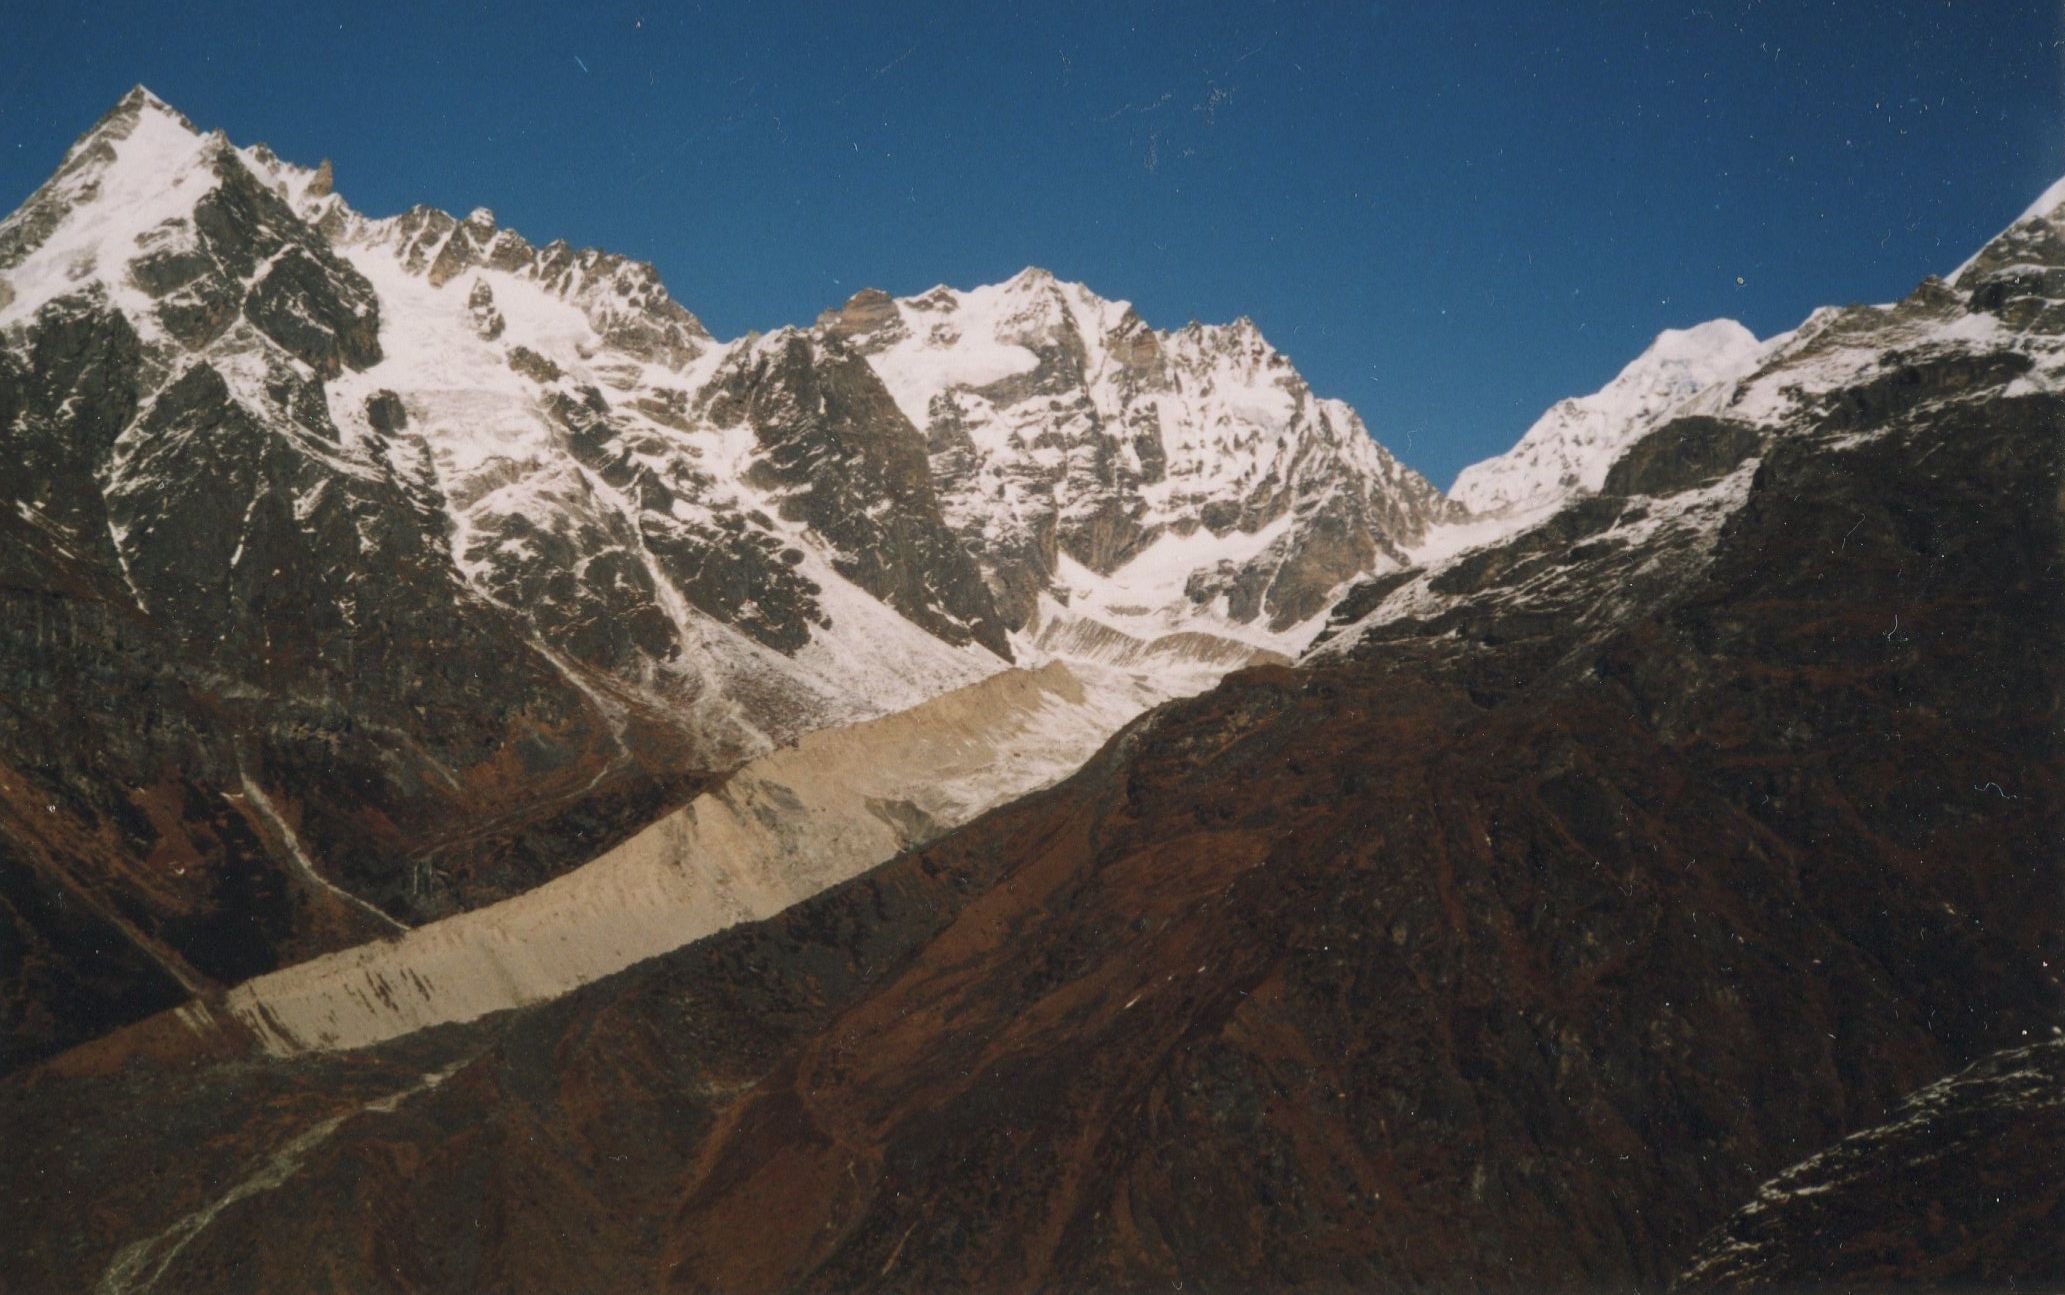 Balephi Glacier beneath Mt.Urkinmang in the Jugal Himal